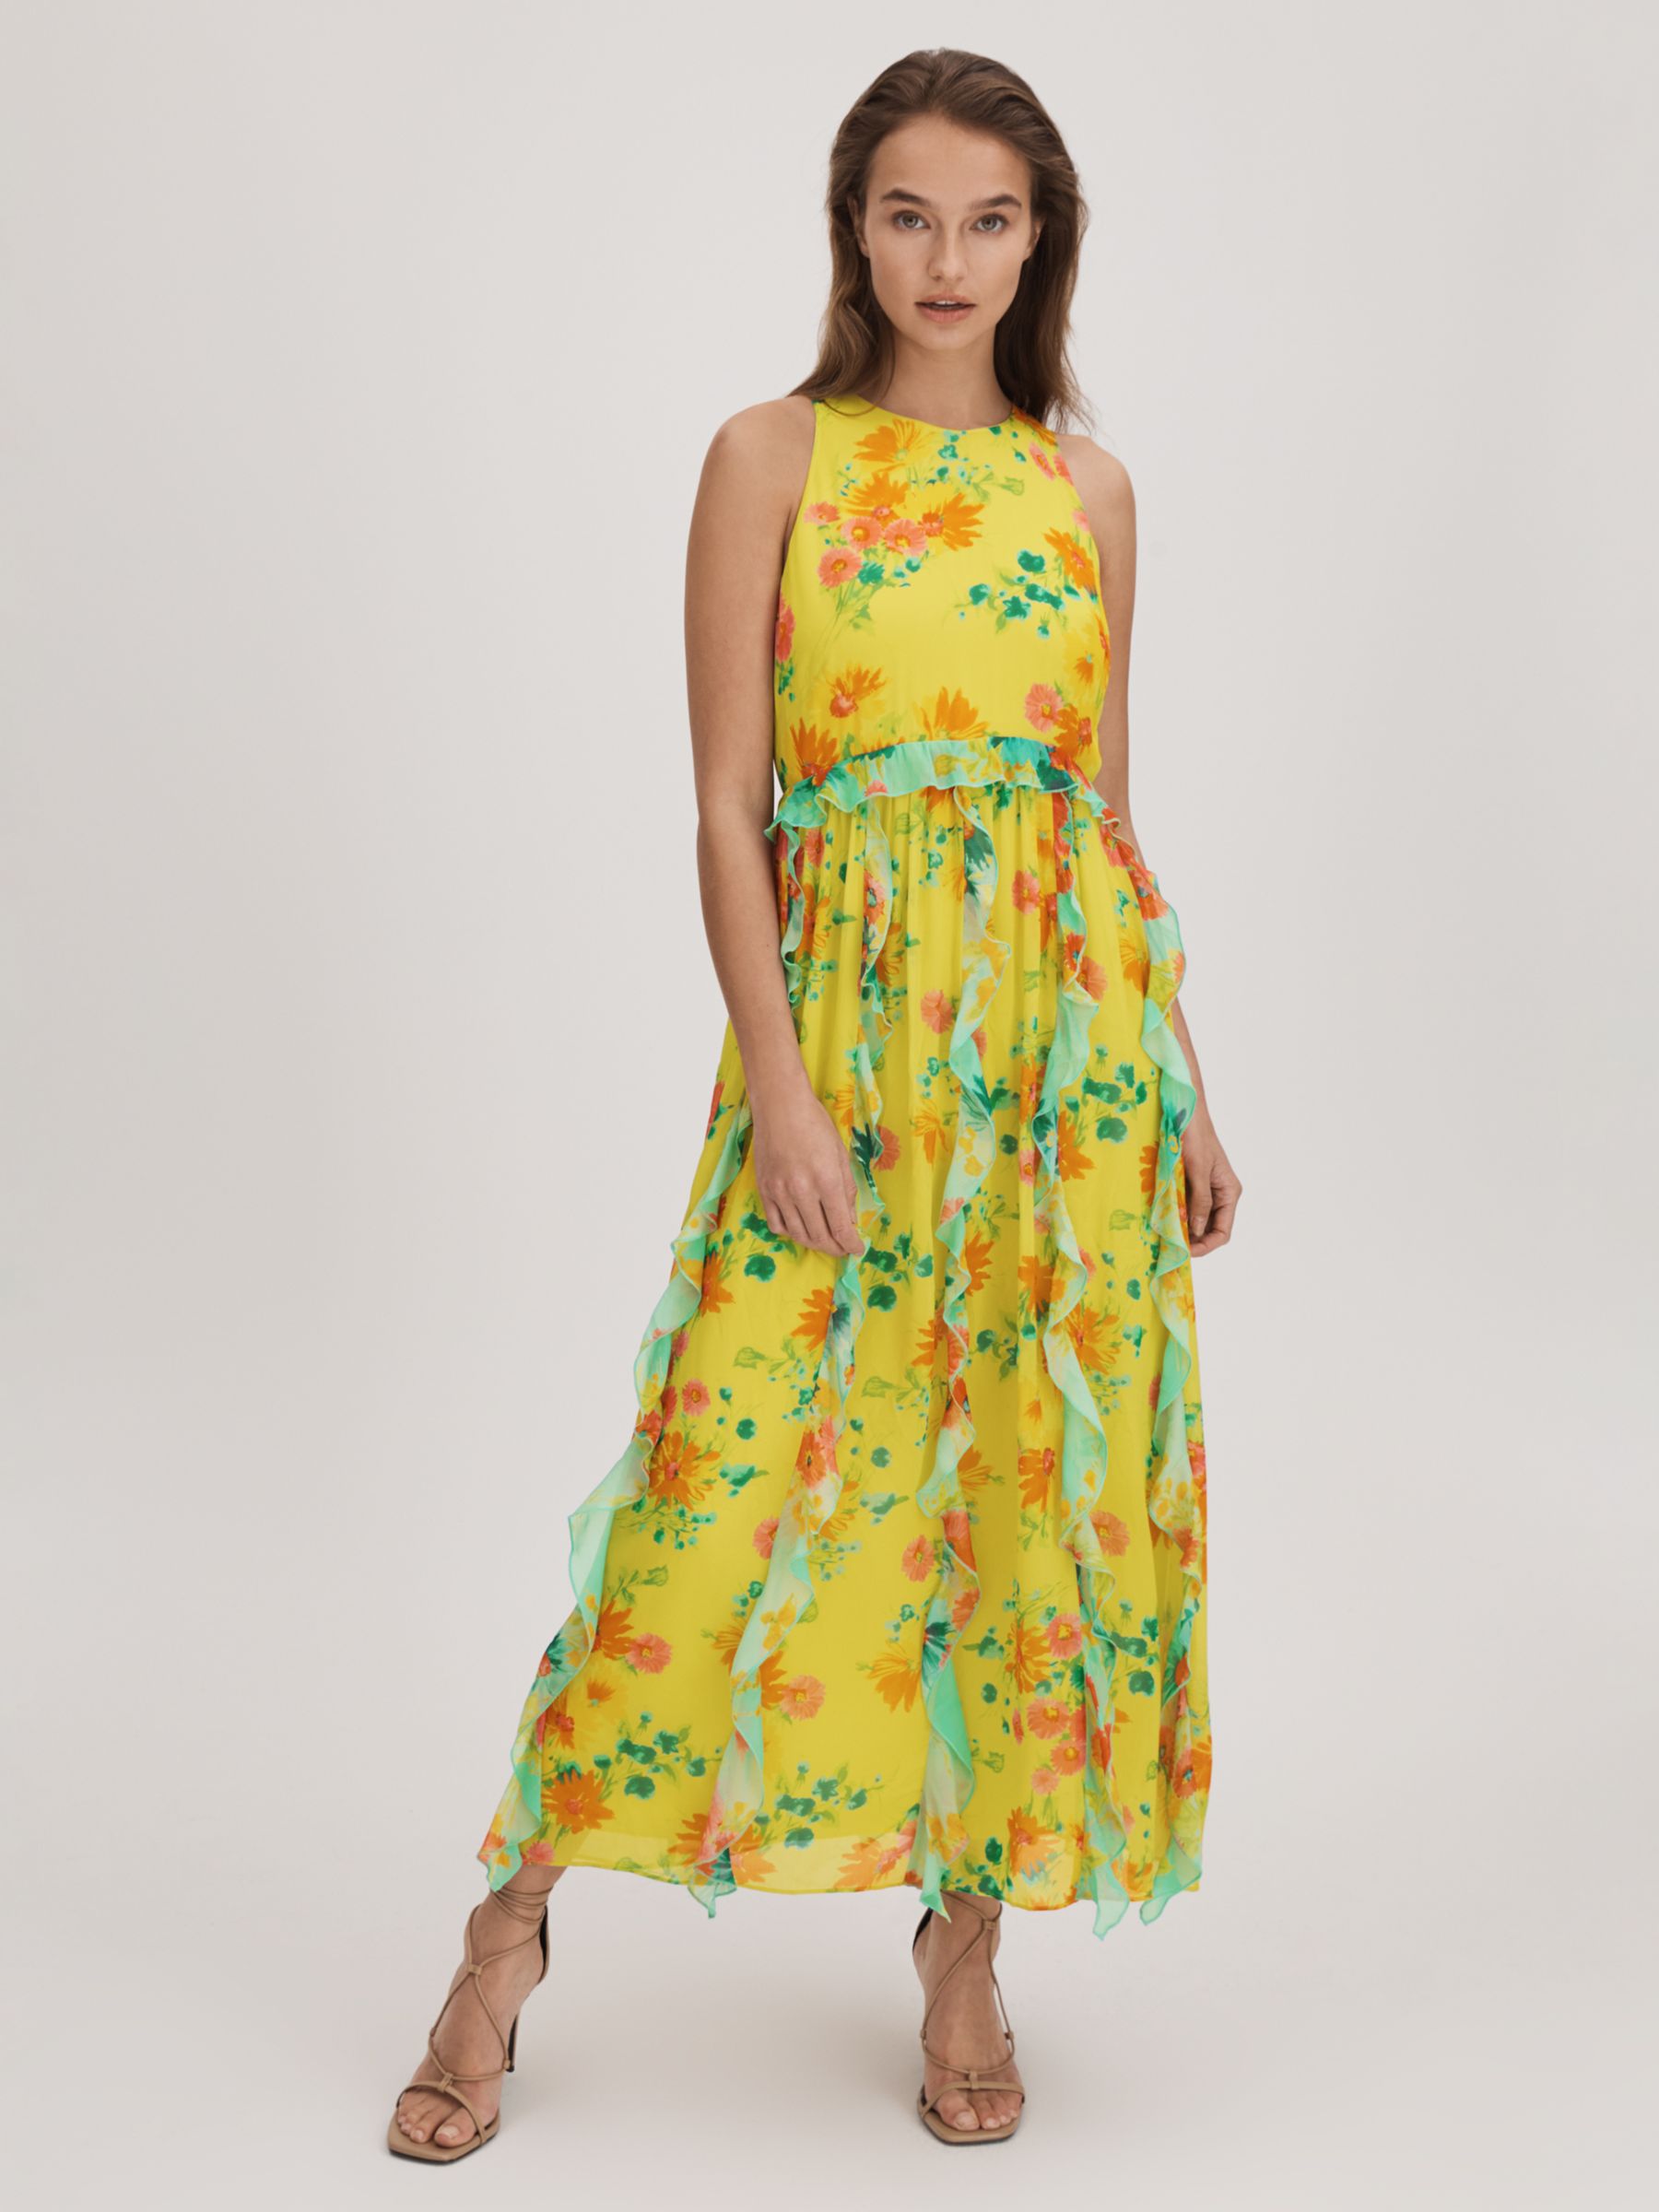 FLORERE Contrast Ruffle Midi Dress, Lime/Multi, 12